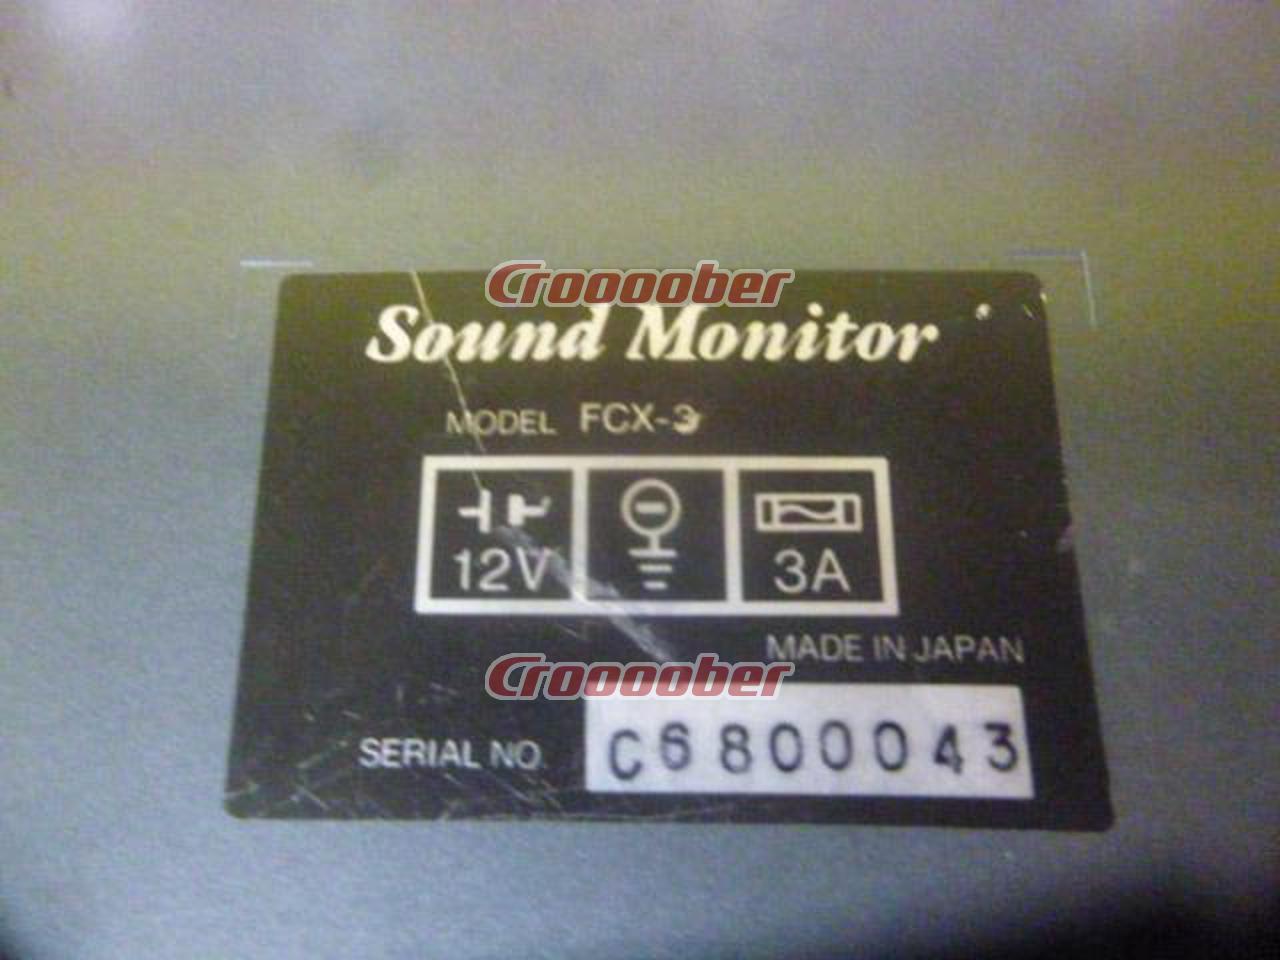 SoundMoniter(サウンドモニター) パラメトリックイコライザー FCX-3